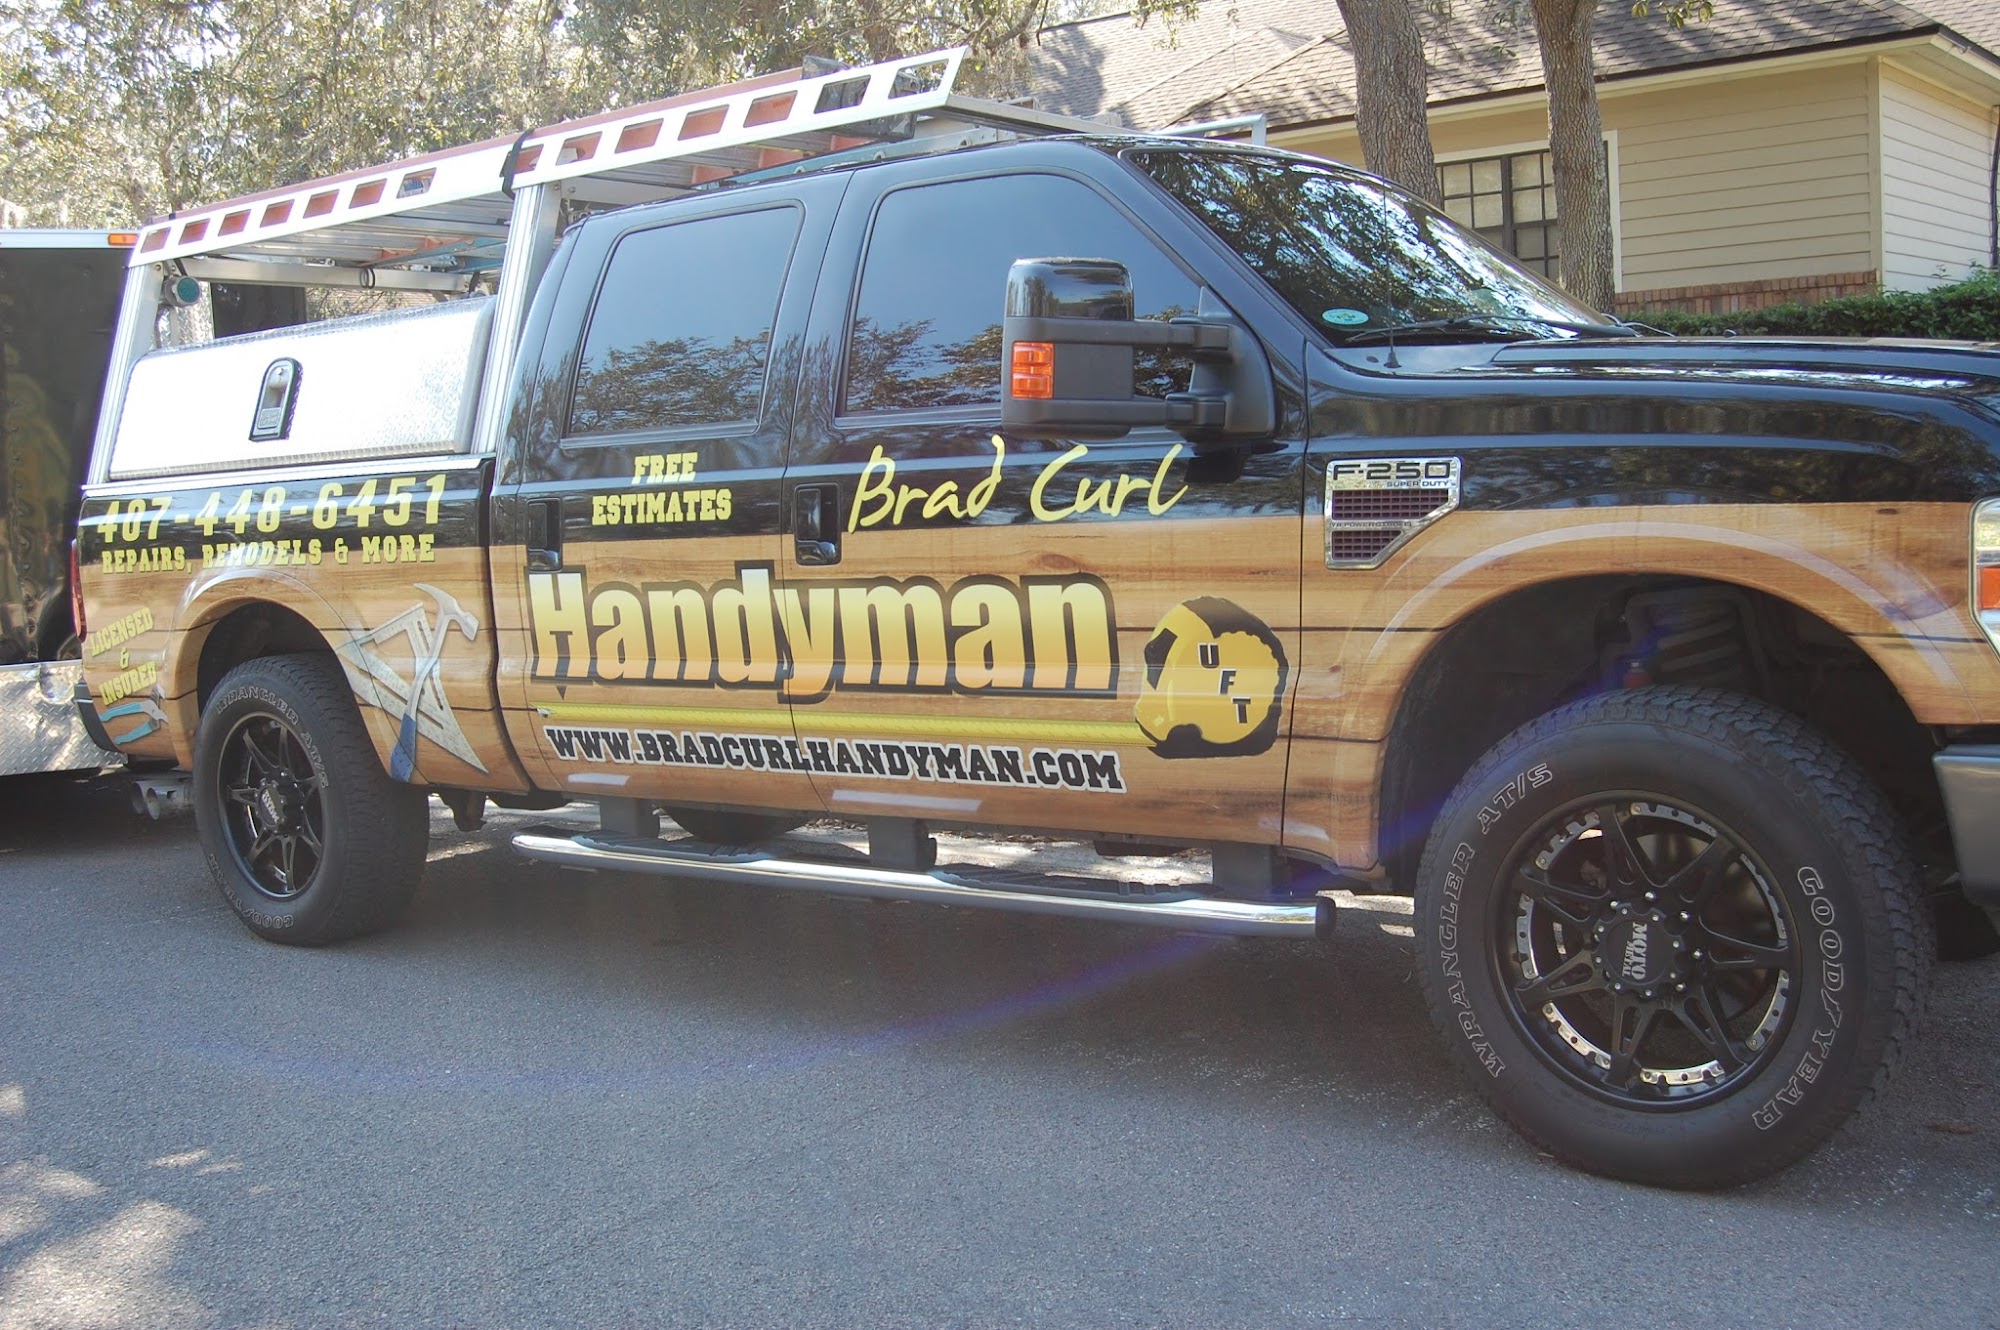 Brad Curl's Handyman Service, LLC